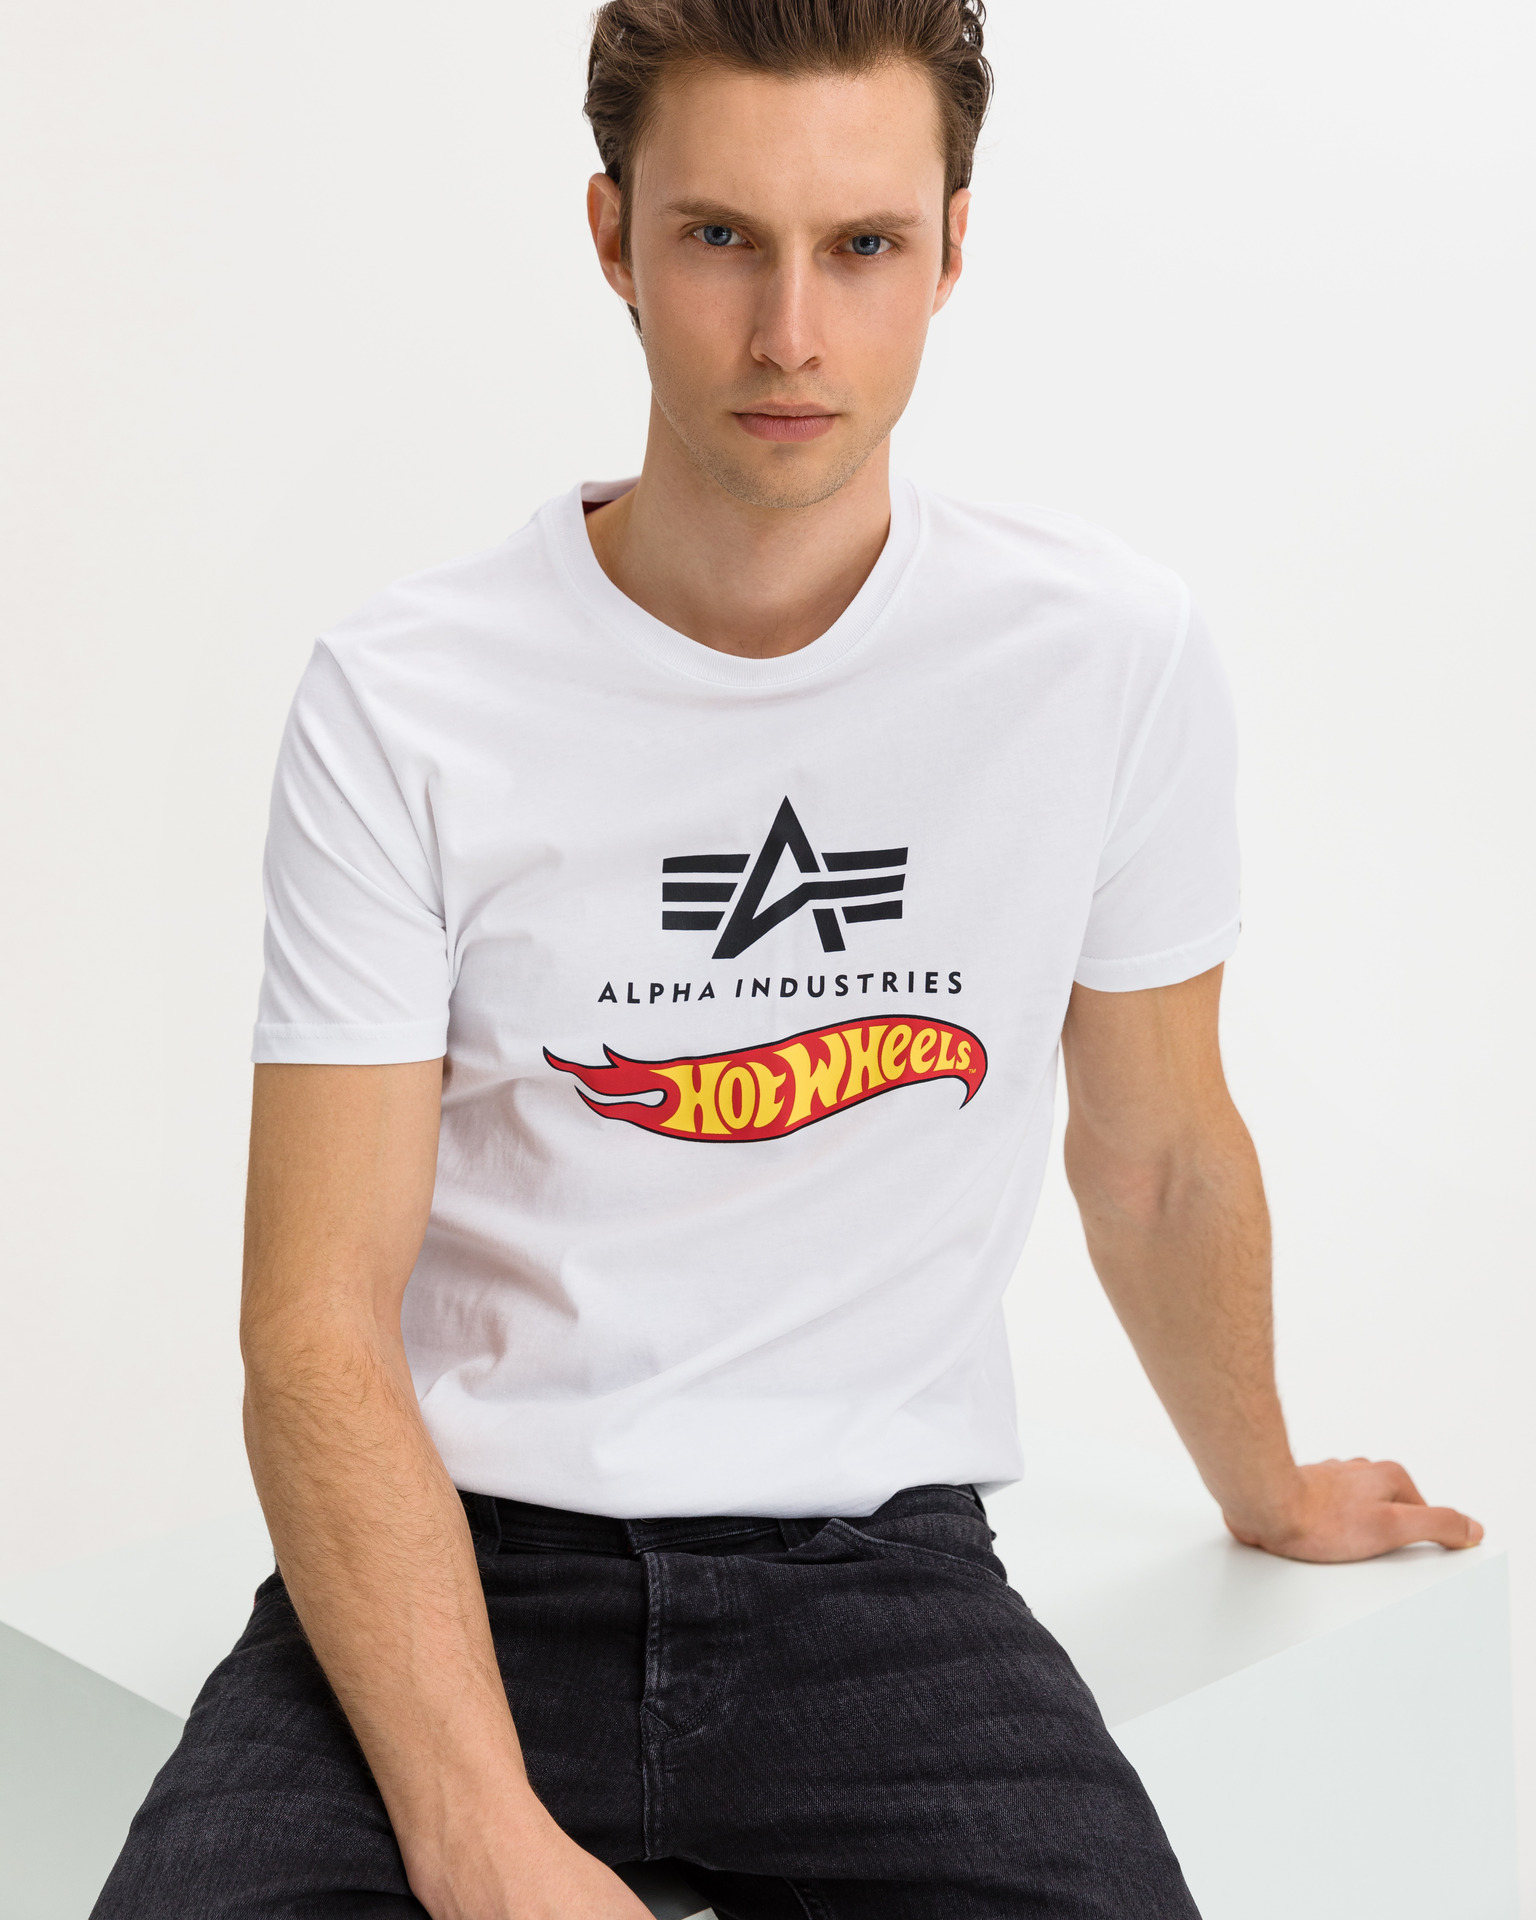 T-shirt Wheels Industries Hot - Flag Alpha